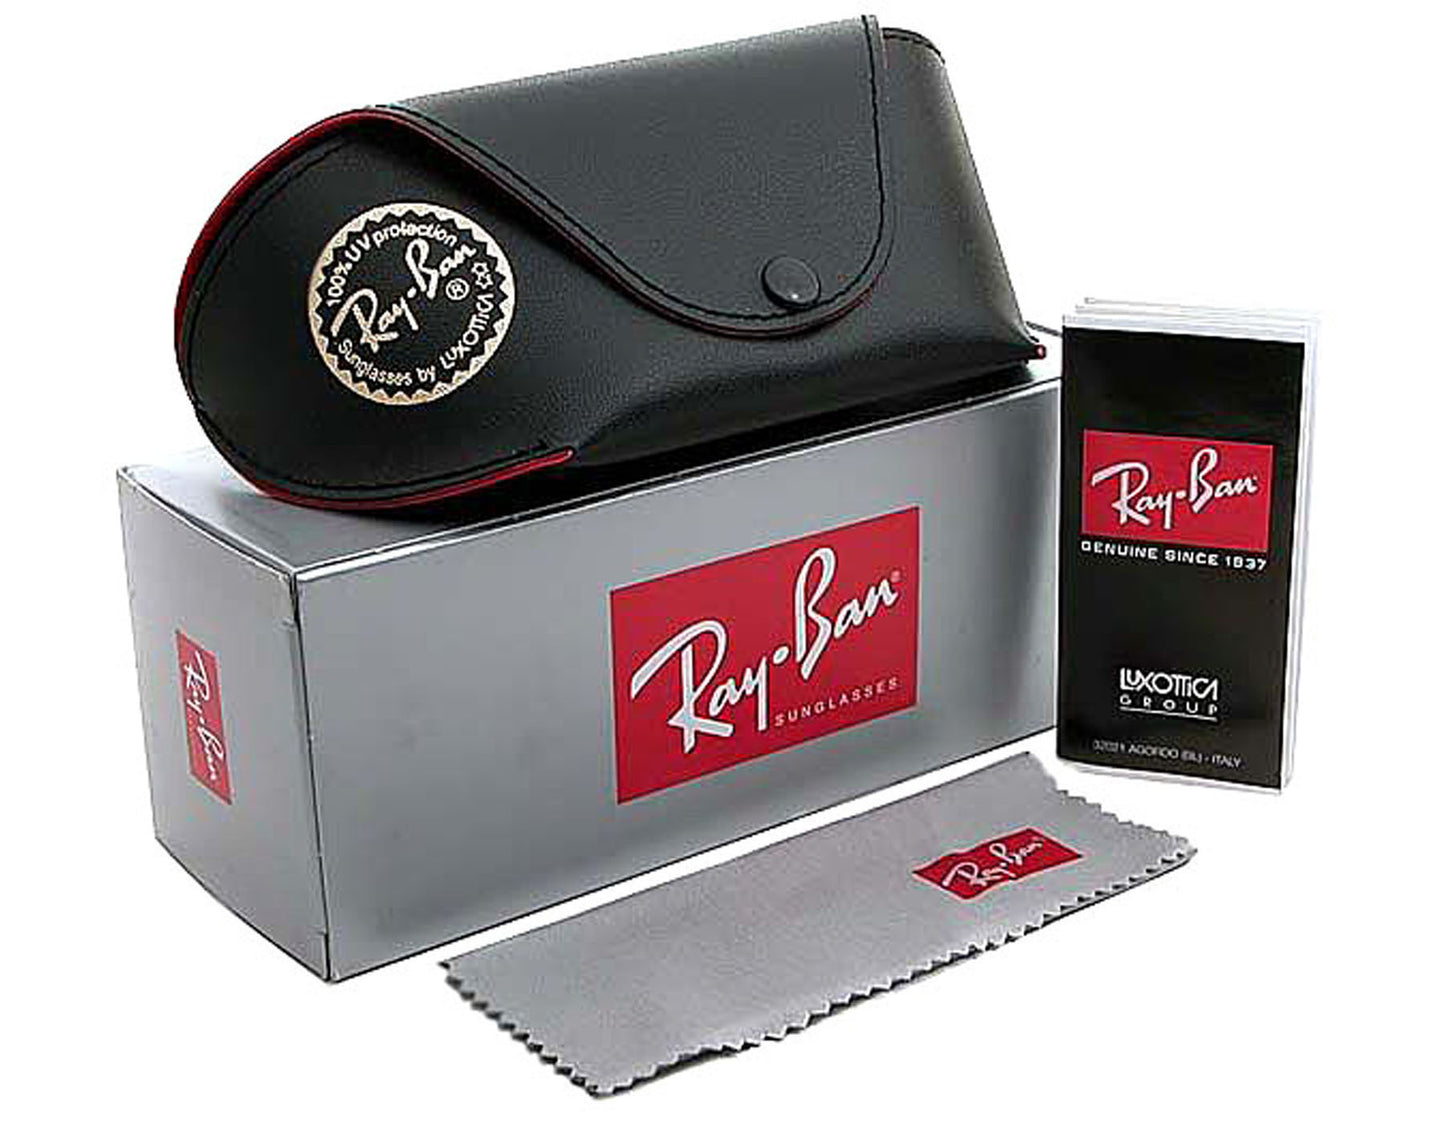 Ray Ban RB4387-639980-56  New Sunglasses